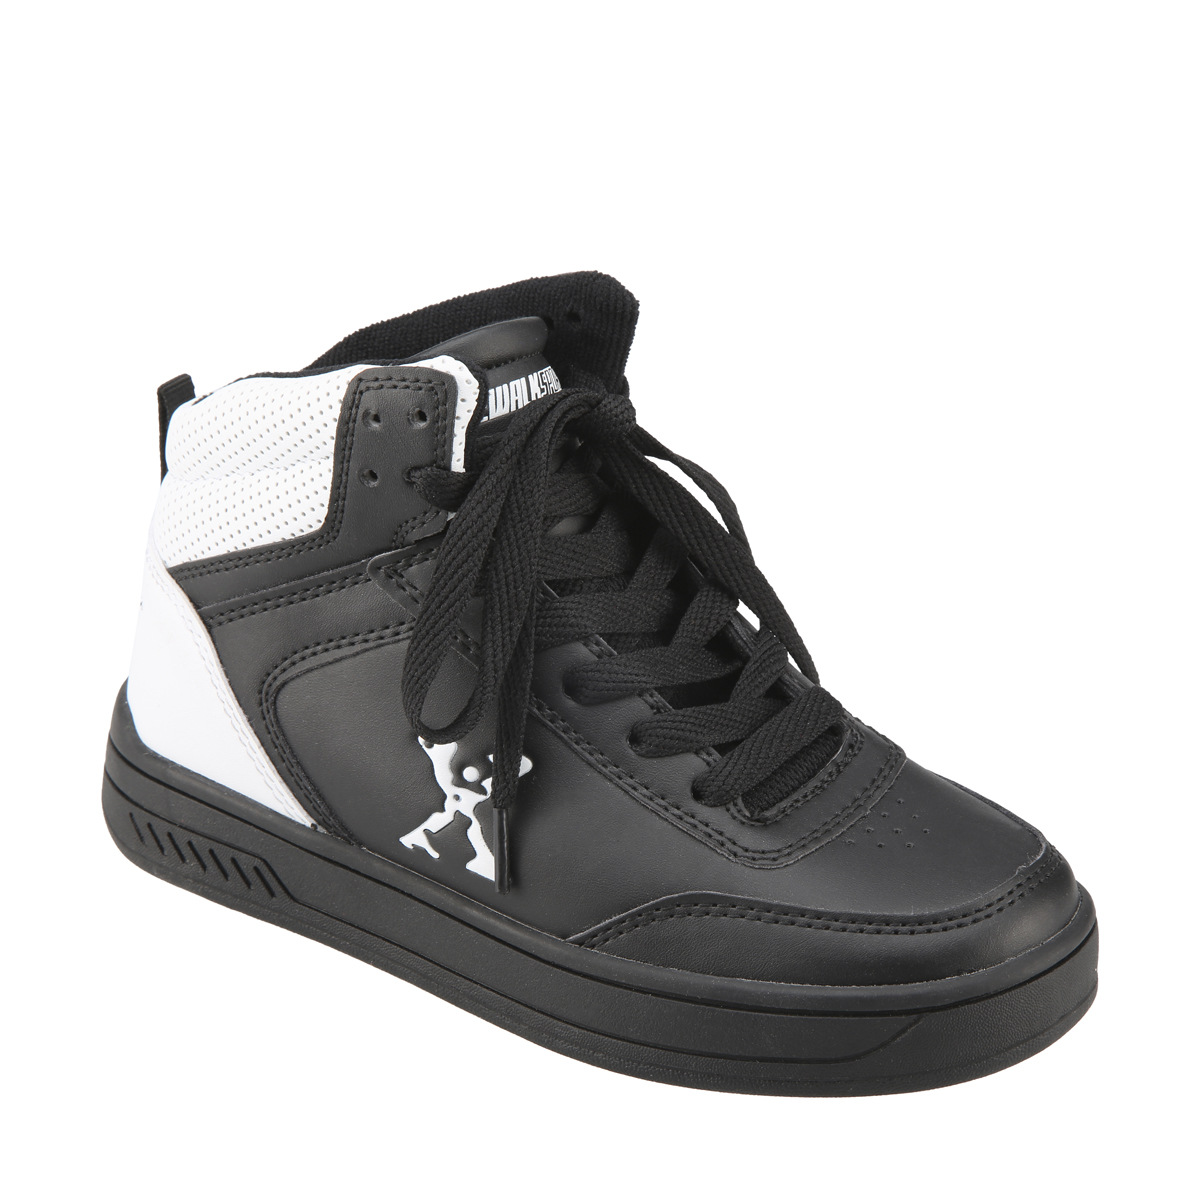 Sidewalk Sports Size 2 Black Skate Shoes